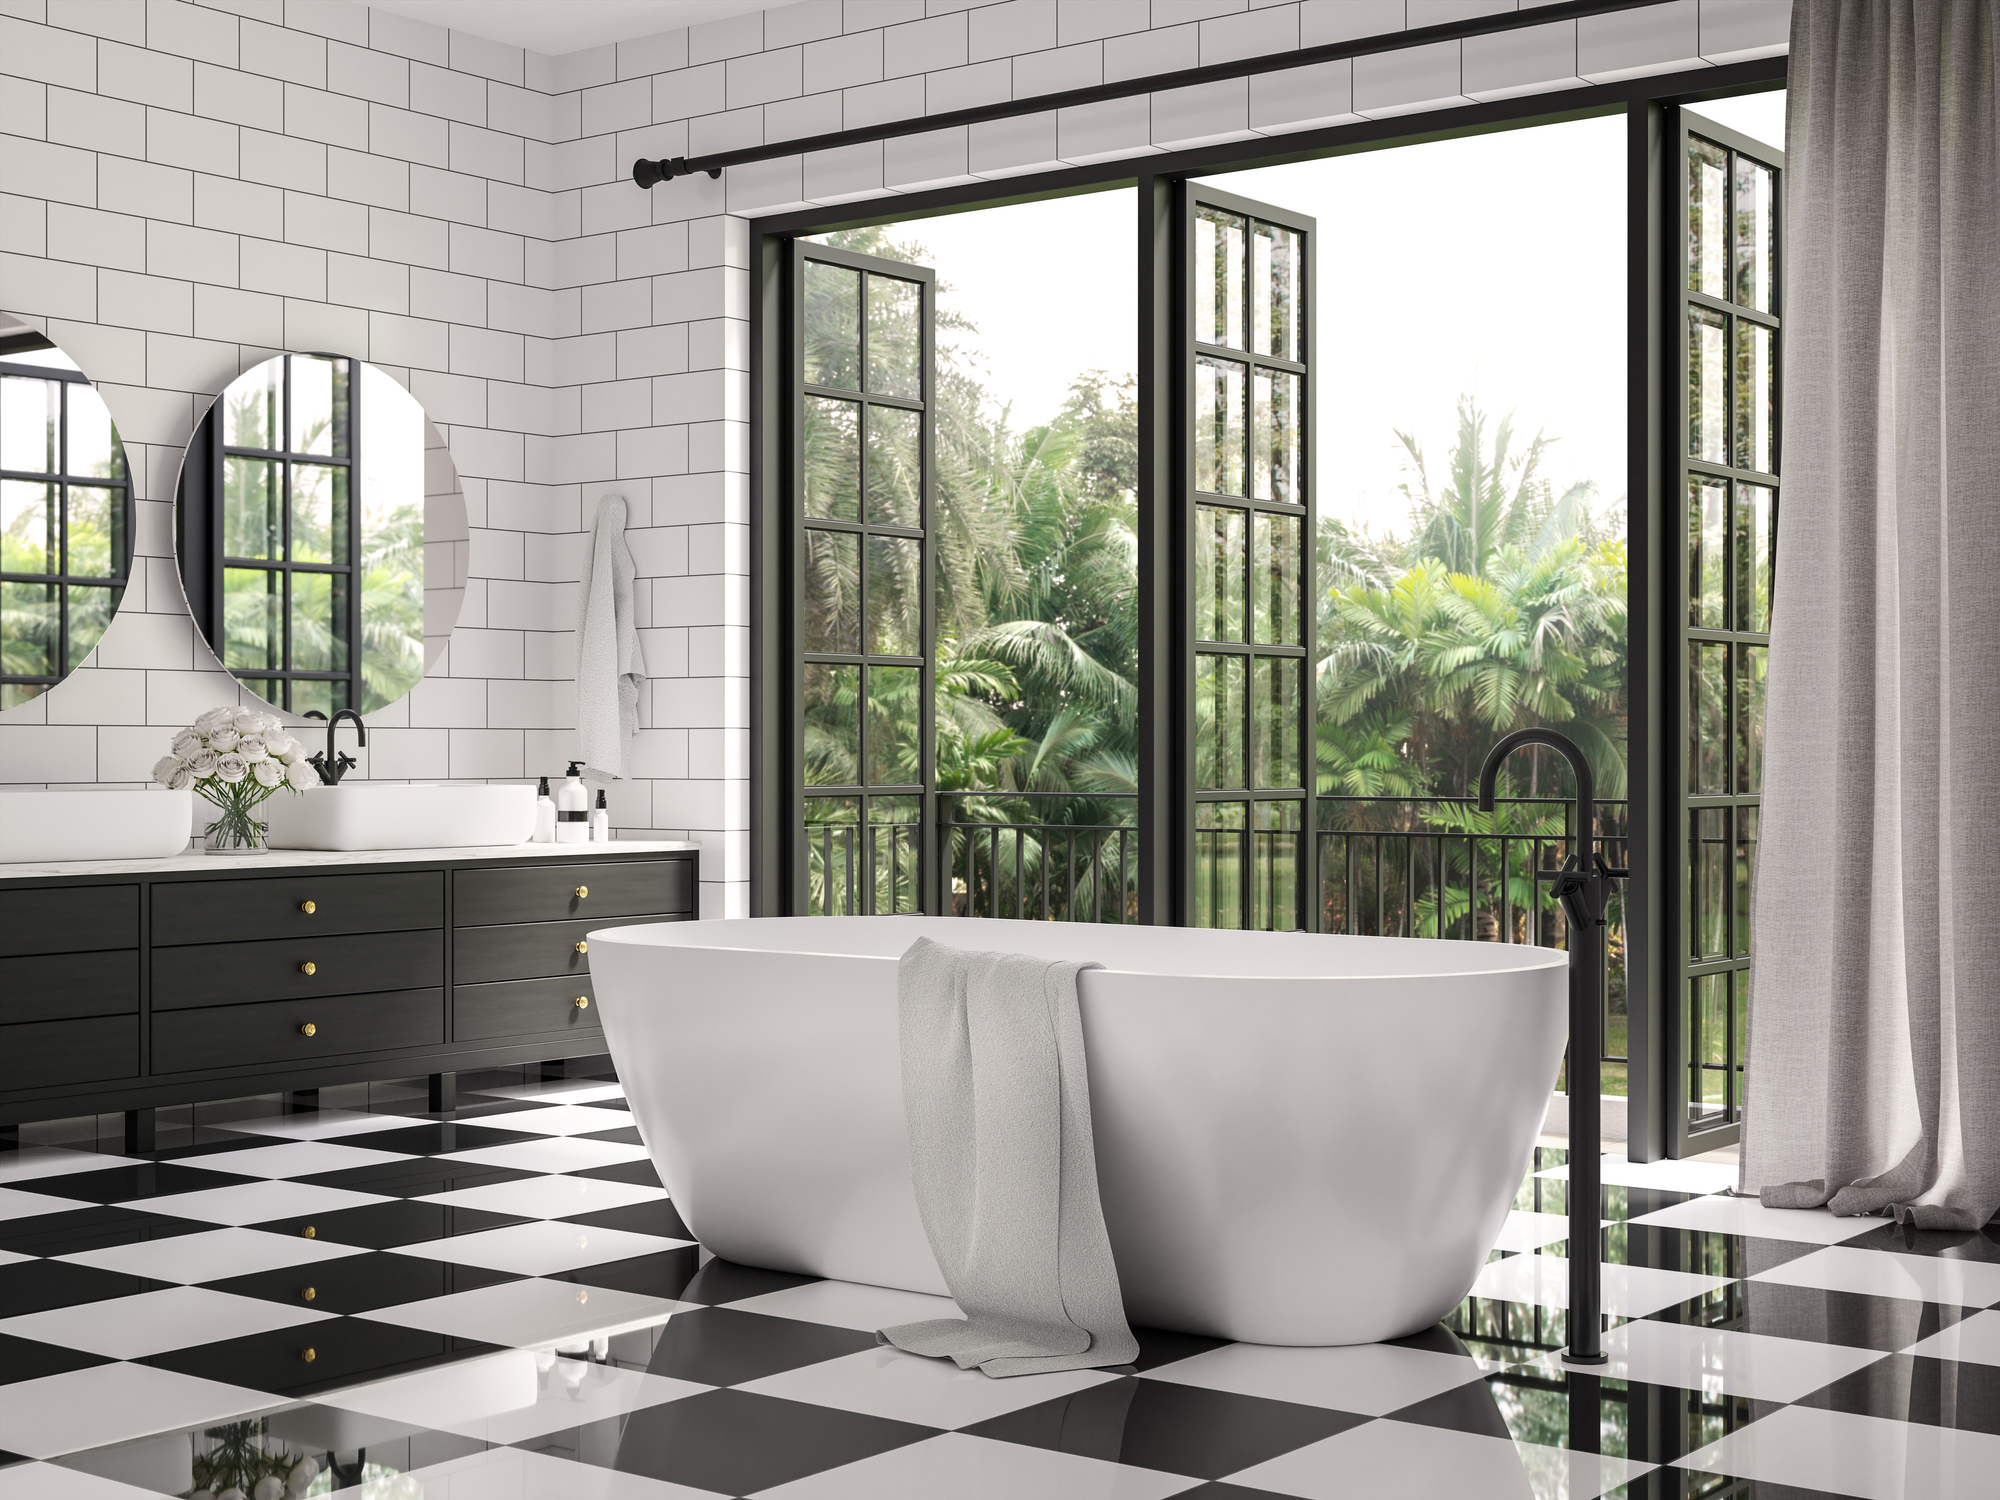 Coco Chanel Inspired Bathroom - Photos & Ideas